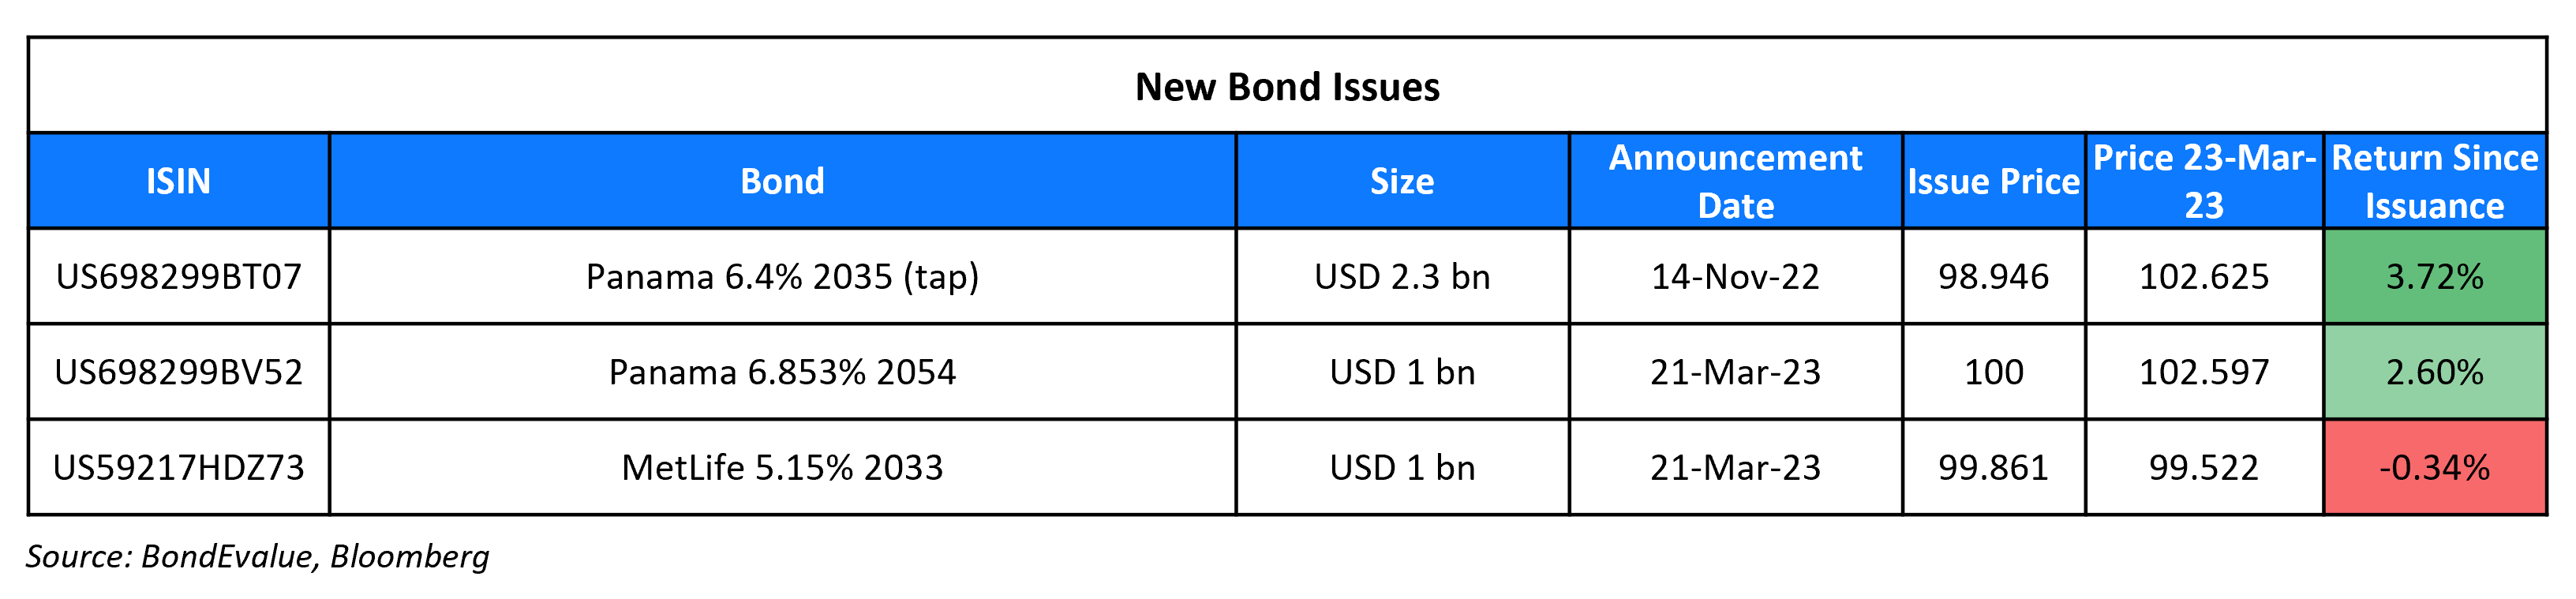 New Bond Issues 23 Mar 23